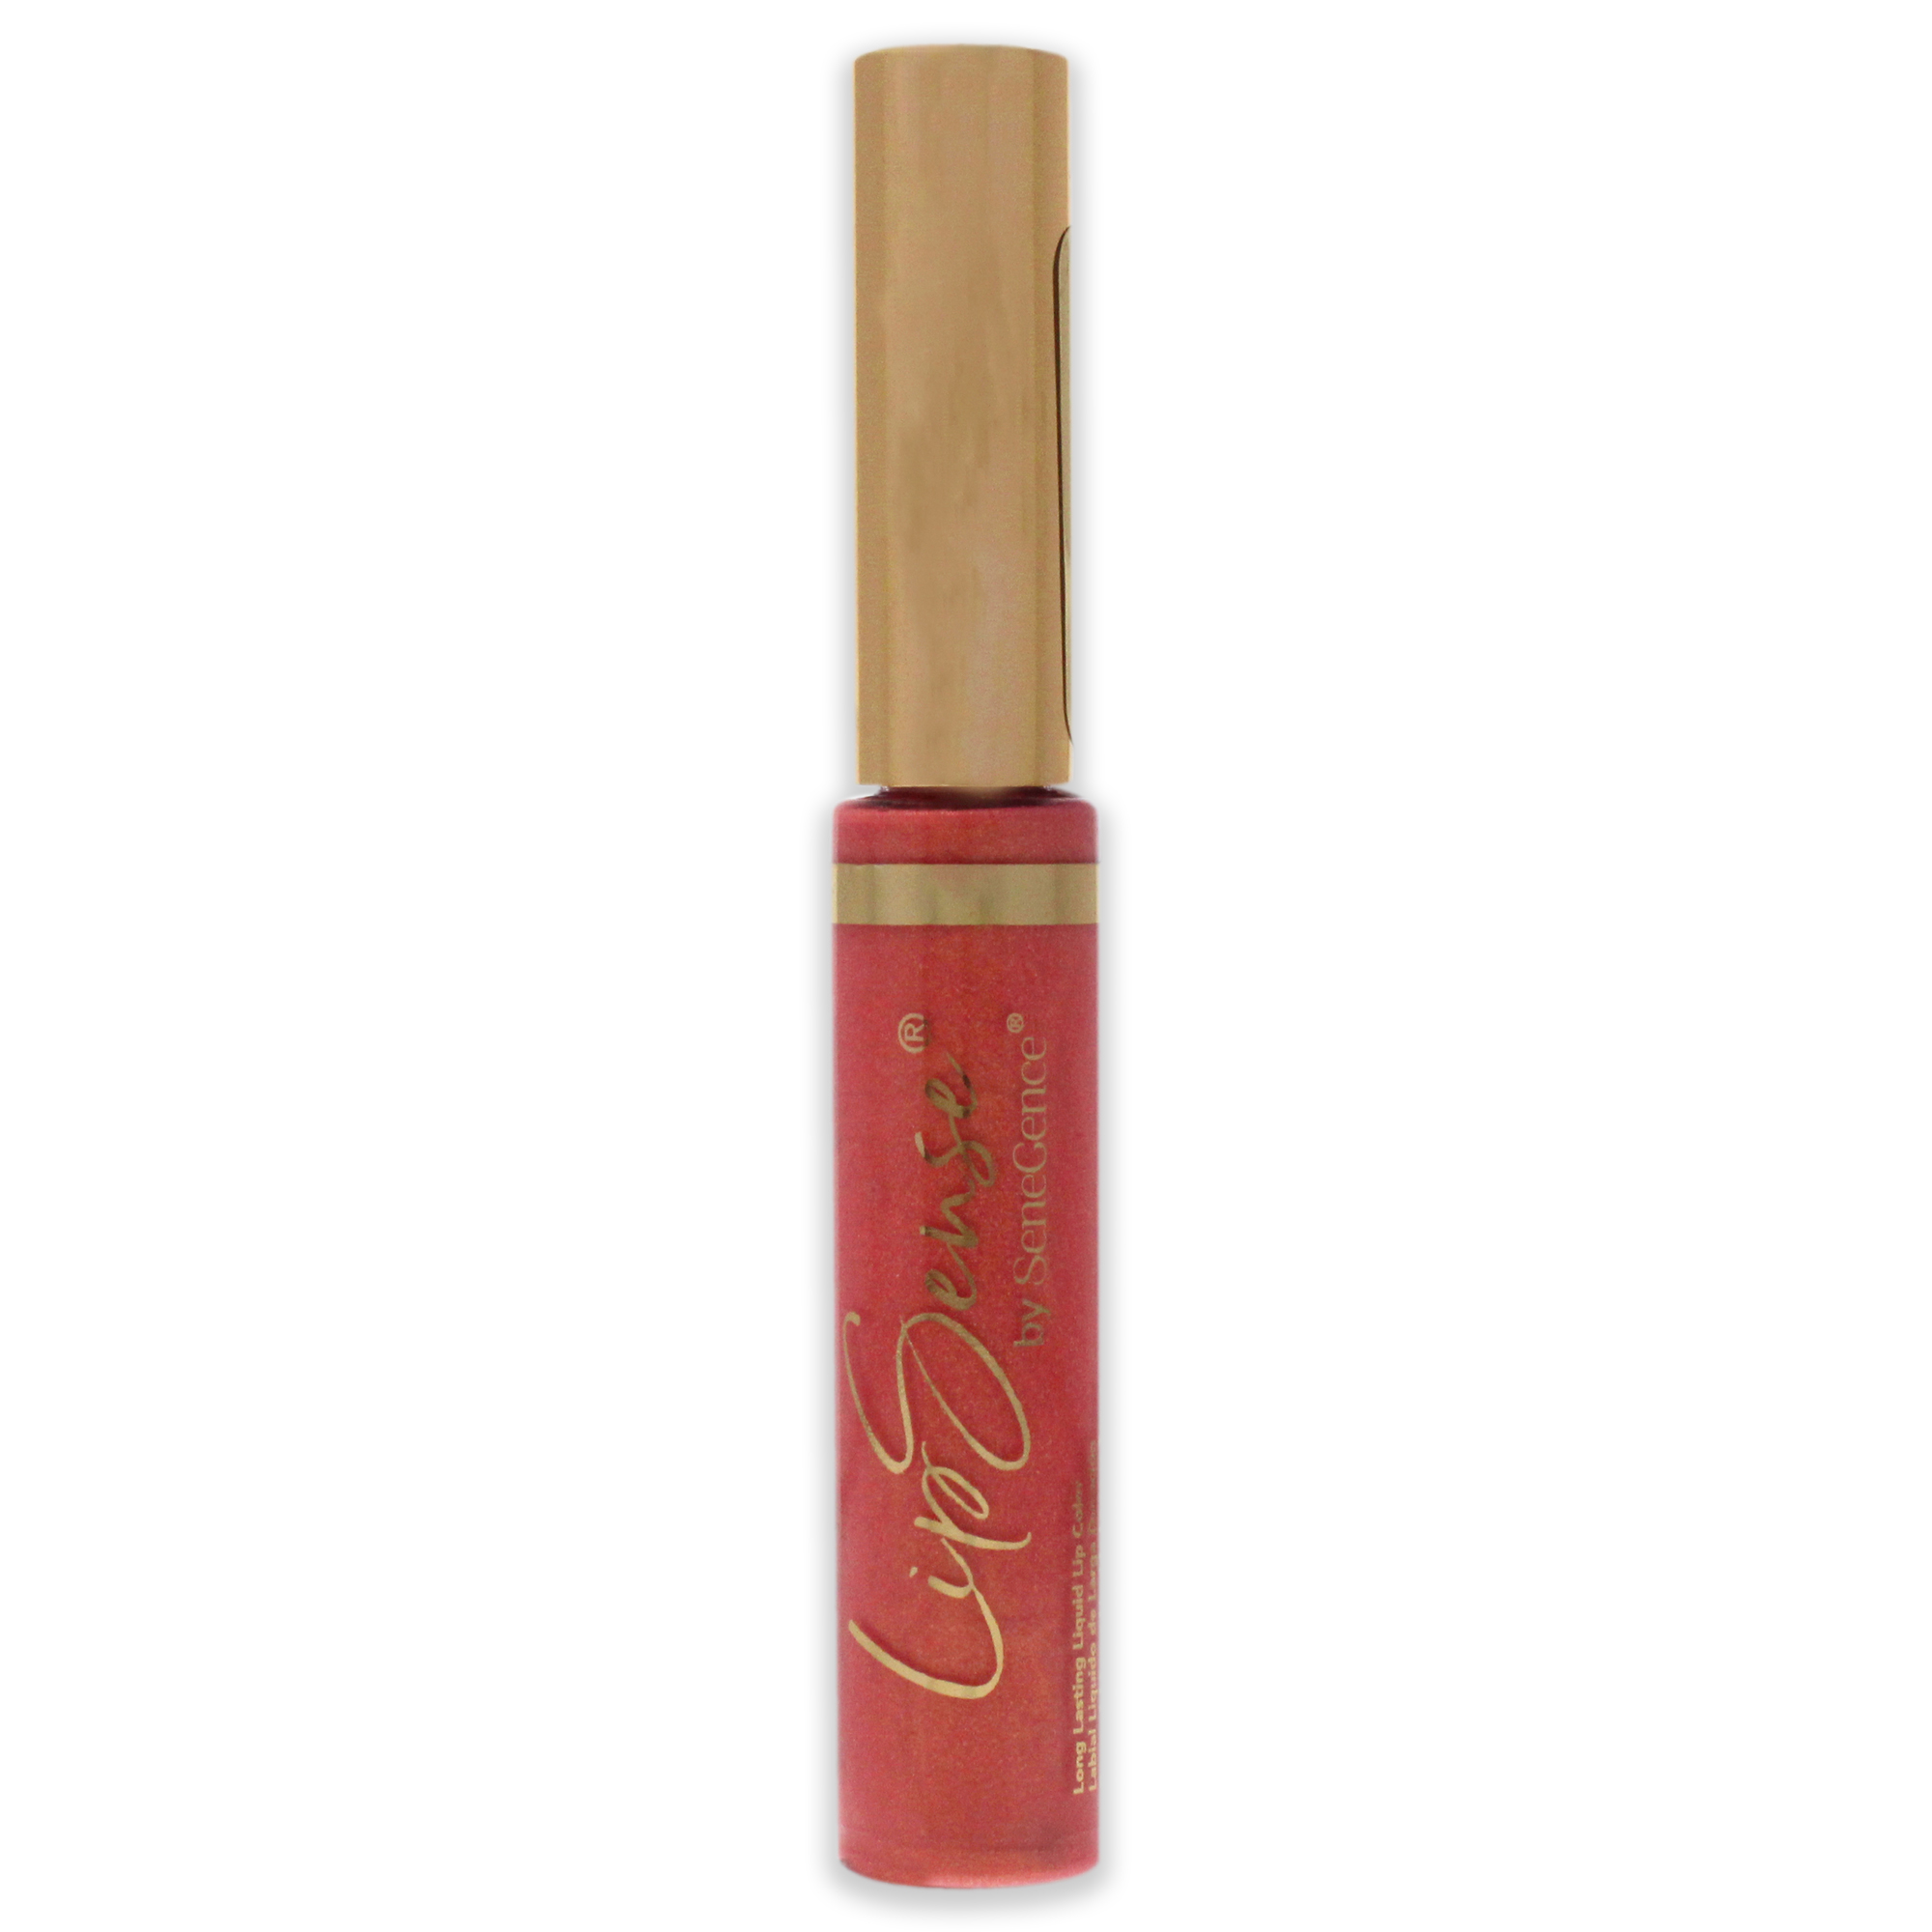 LipSense Liquid Lip Color - Sunshine by SeneGence for Women - 0.25 oz Lipstick